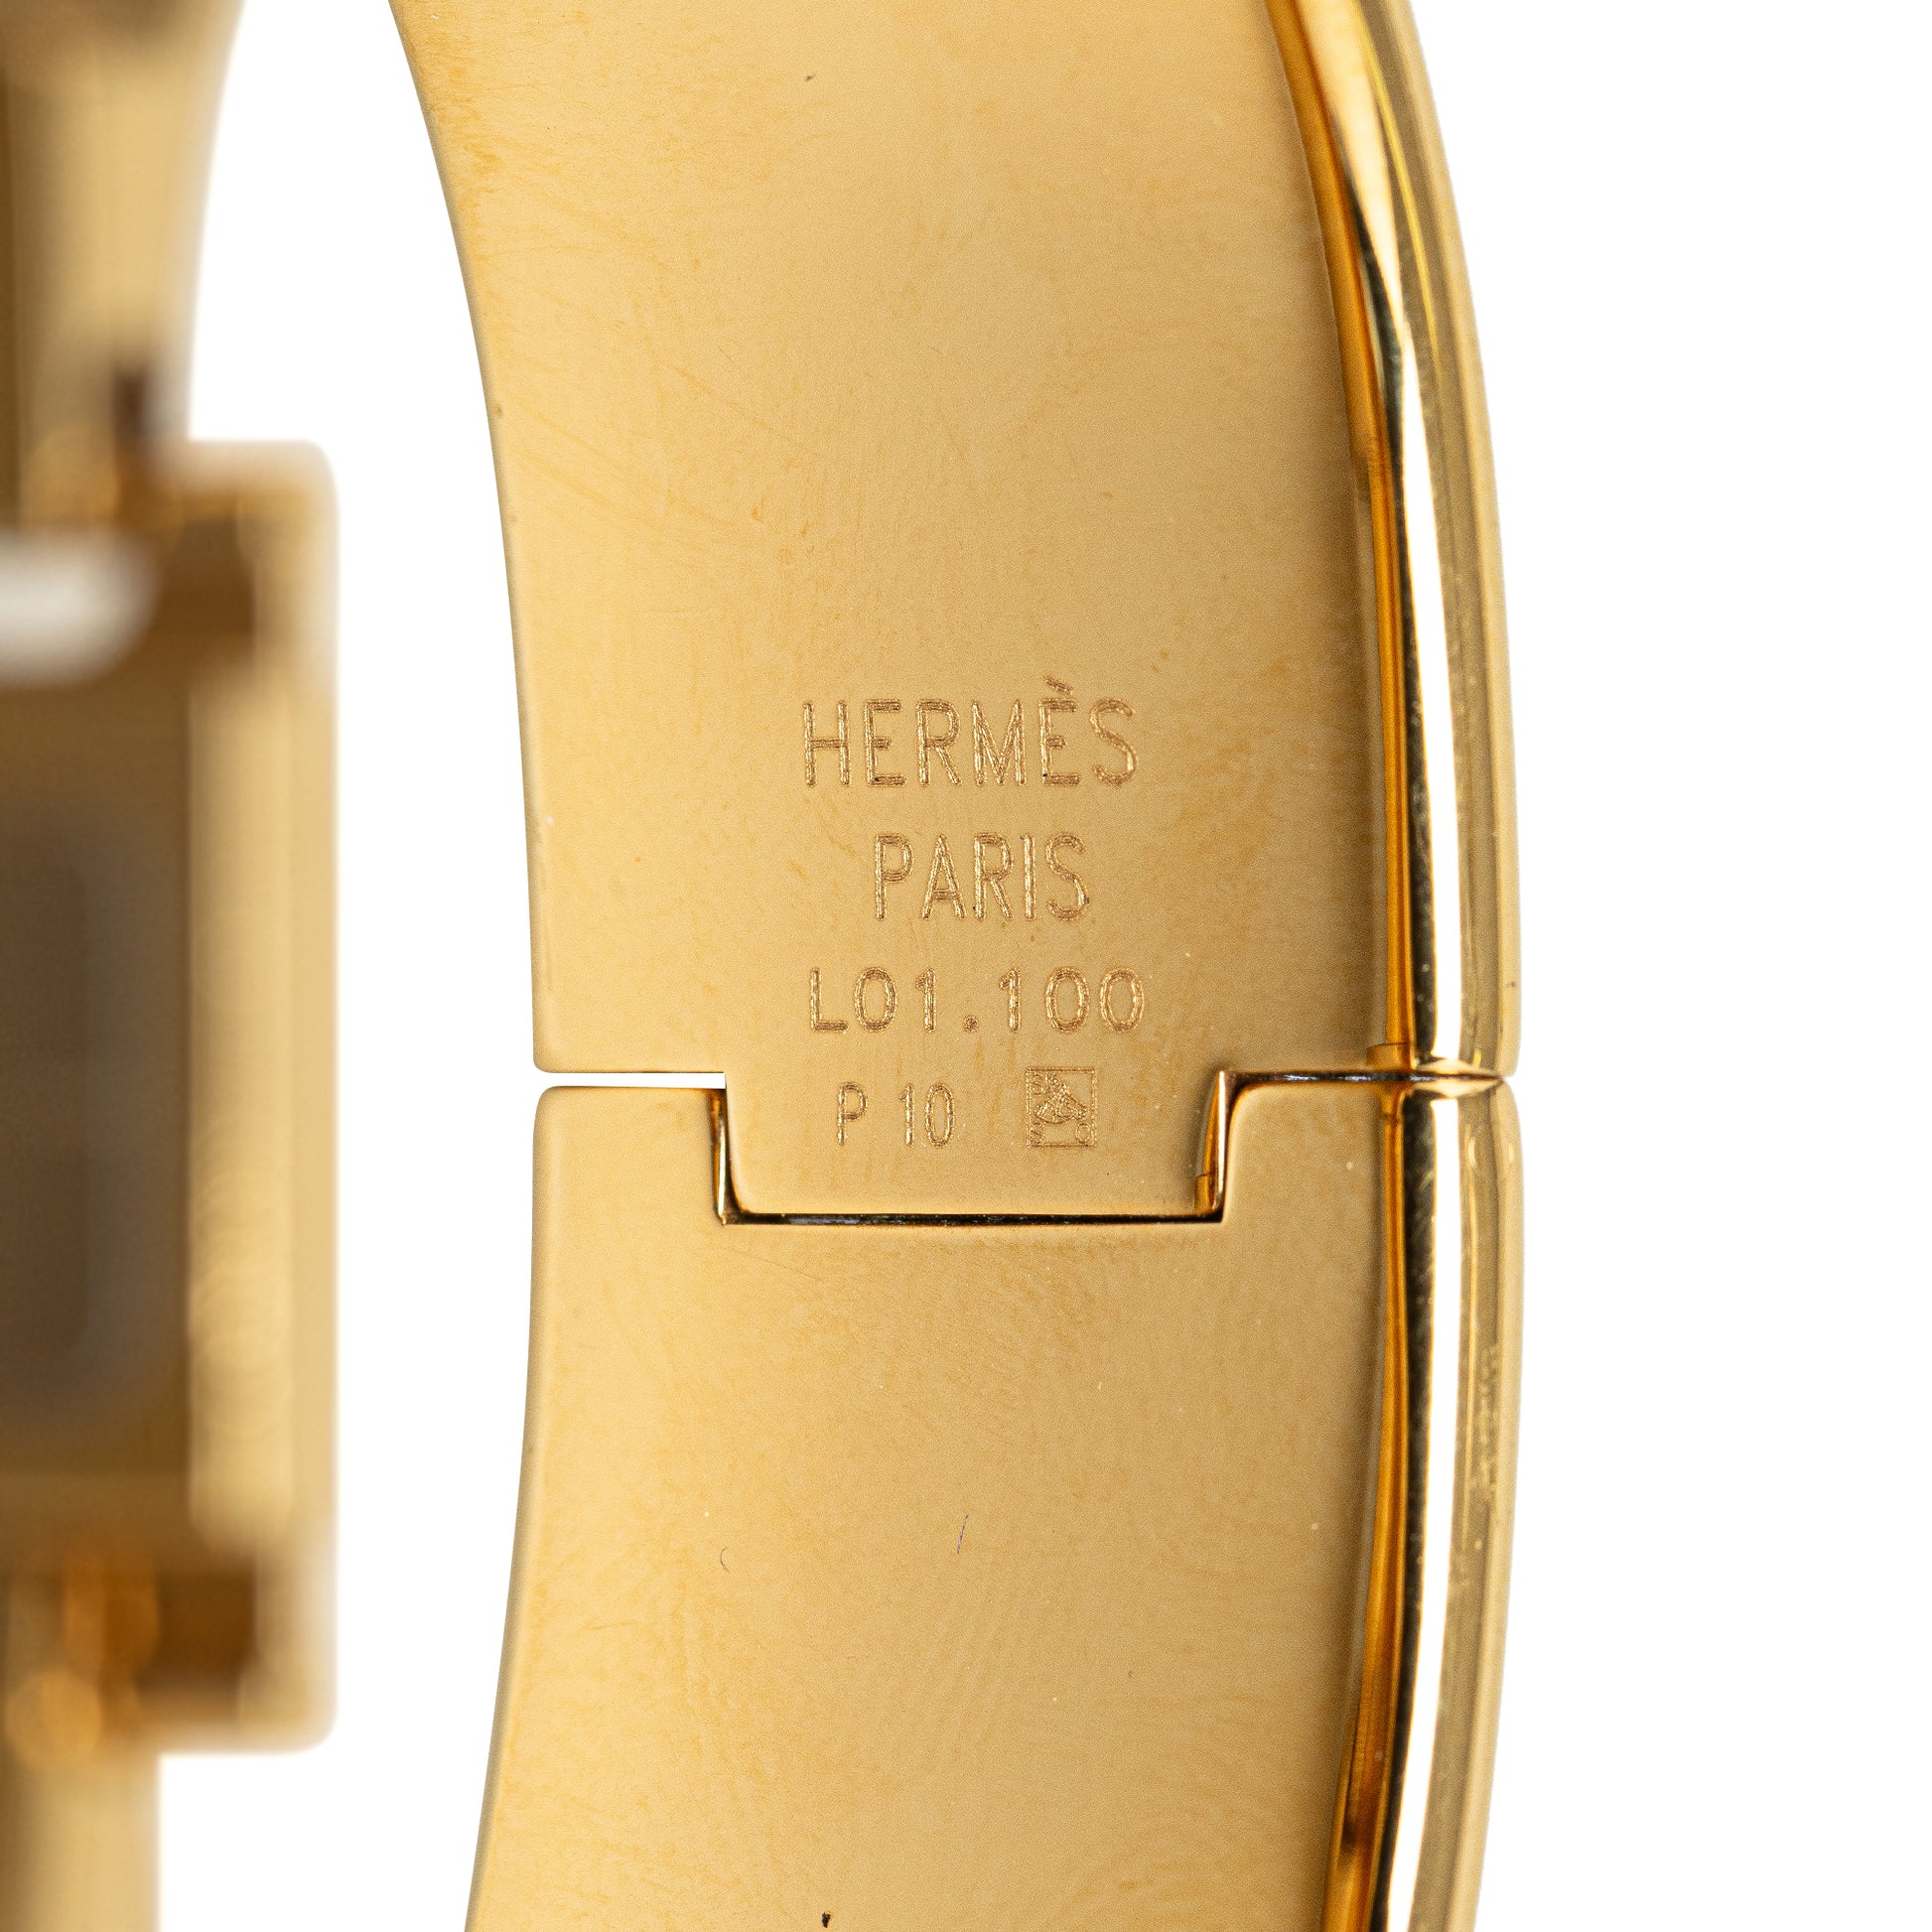 Quartz Gold Plated Stainless Steel Loquet Watch Gold - Gaby Paris